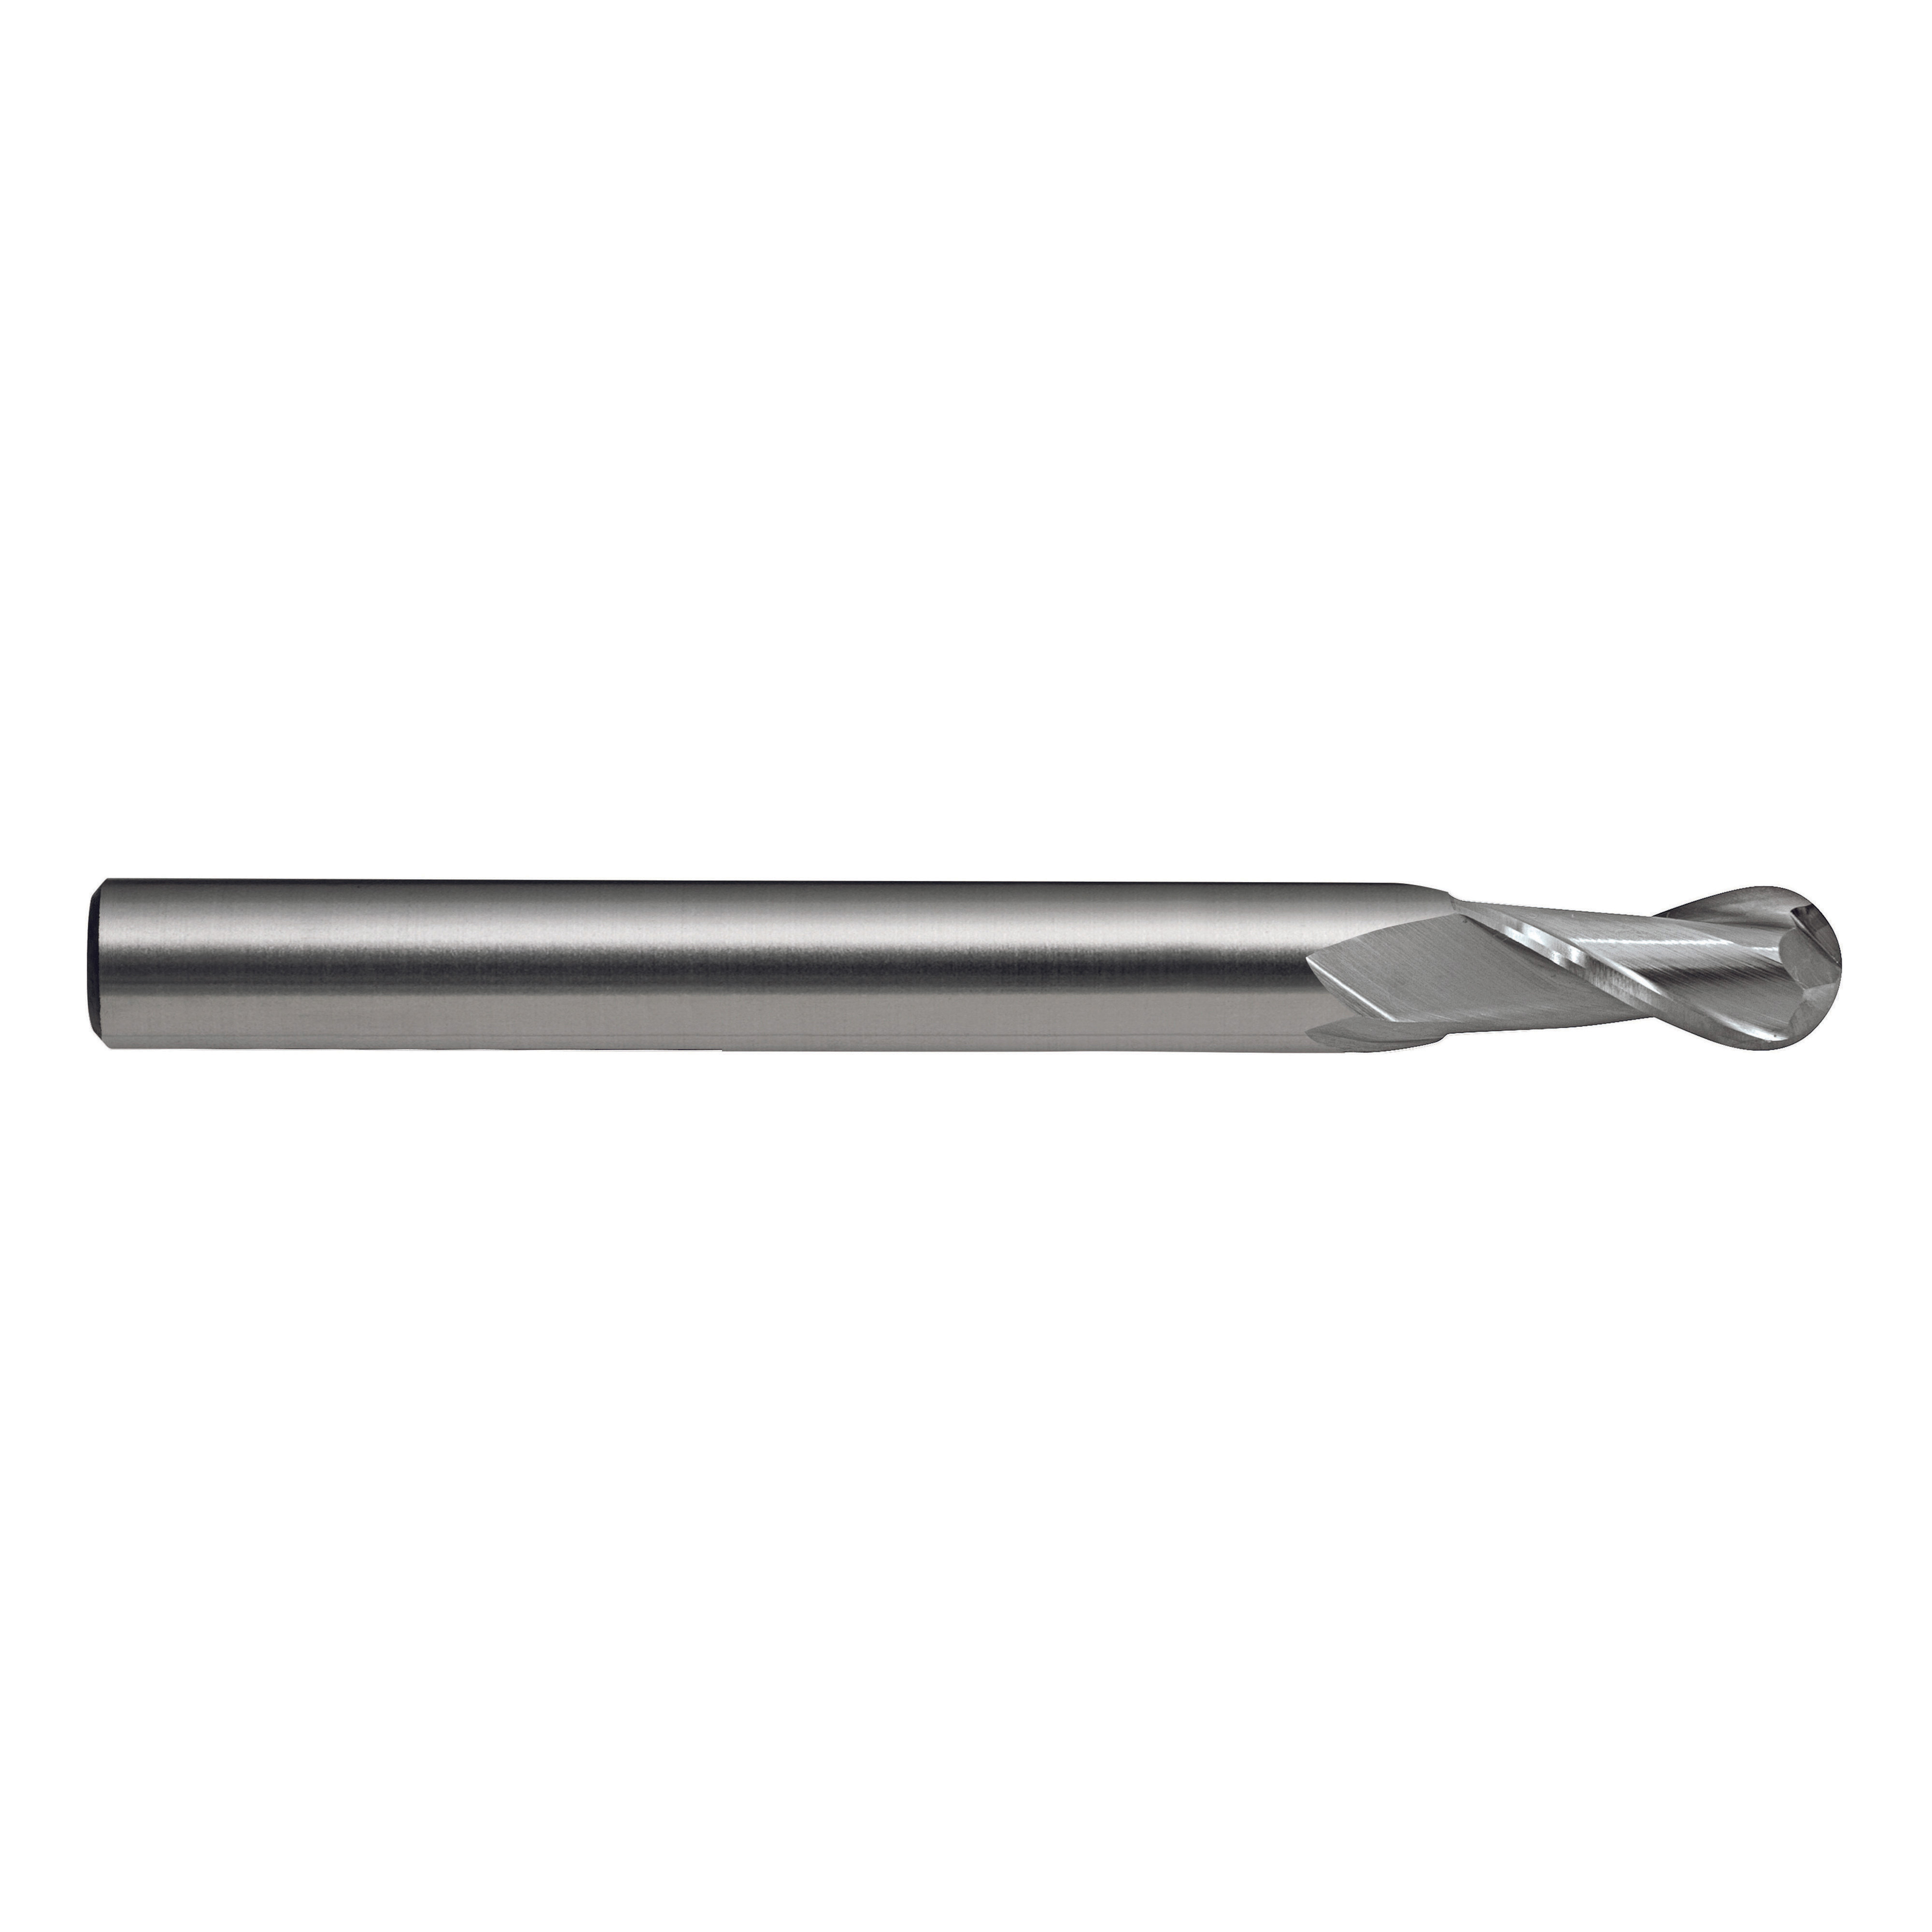 wt 1/4" screw shank P&N Sutton CoHSS end mill 2 flutes slot drill 1/4" 